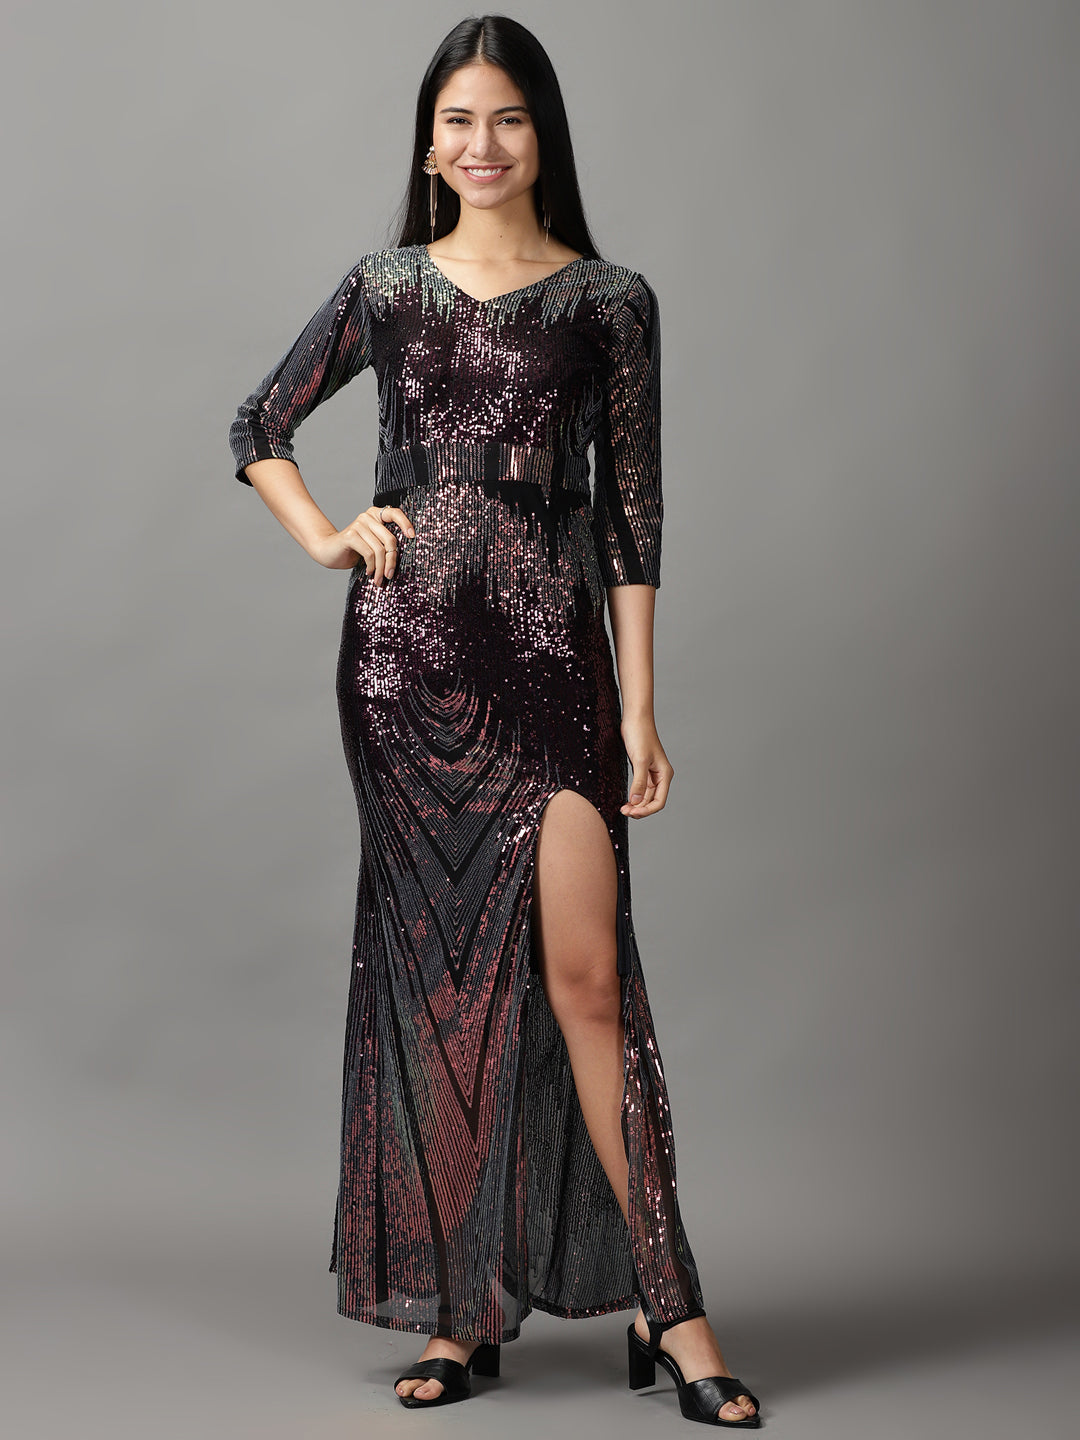 Women's Metallic Embellished Bodycon Dress